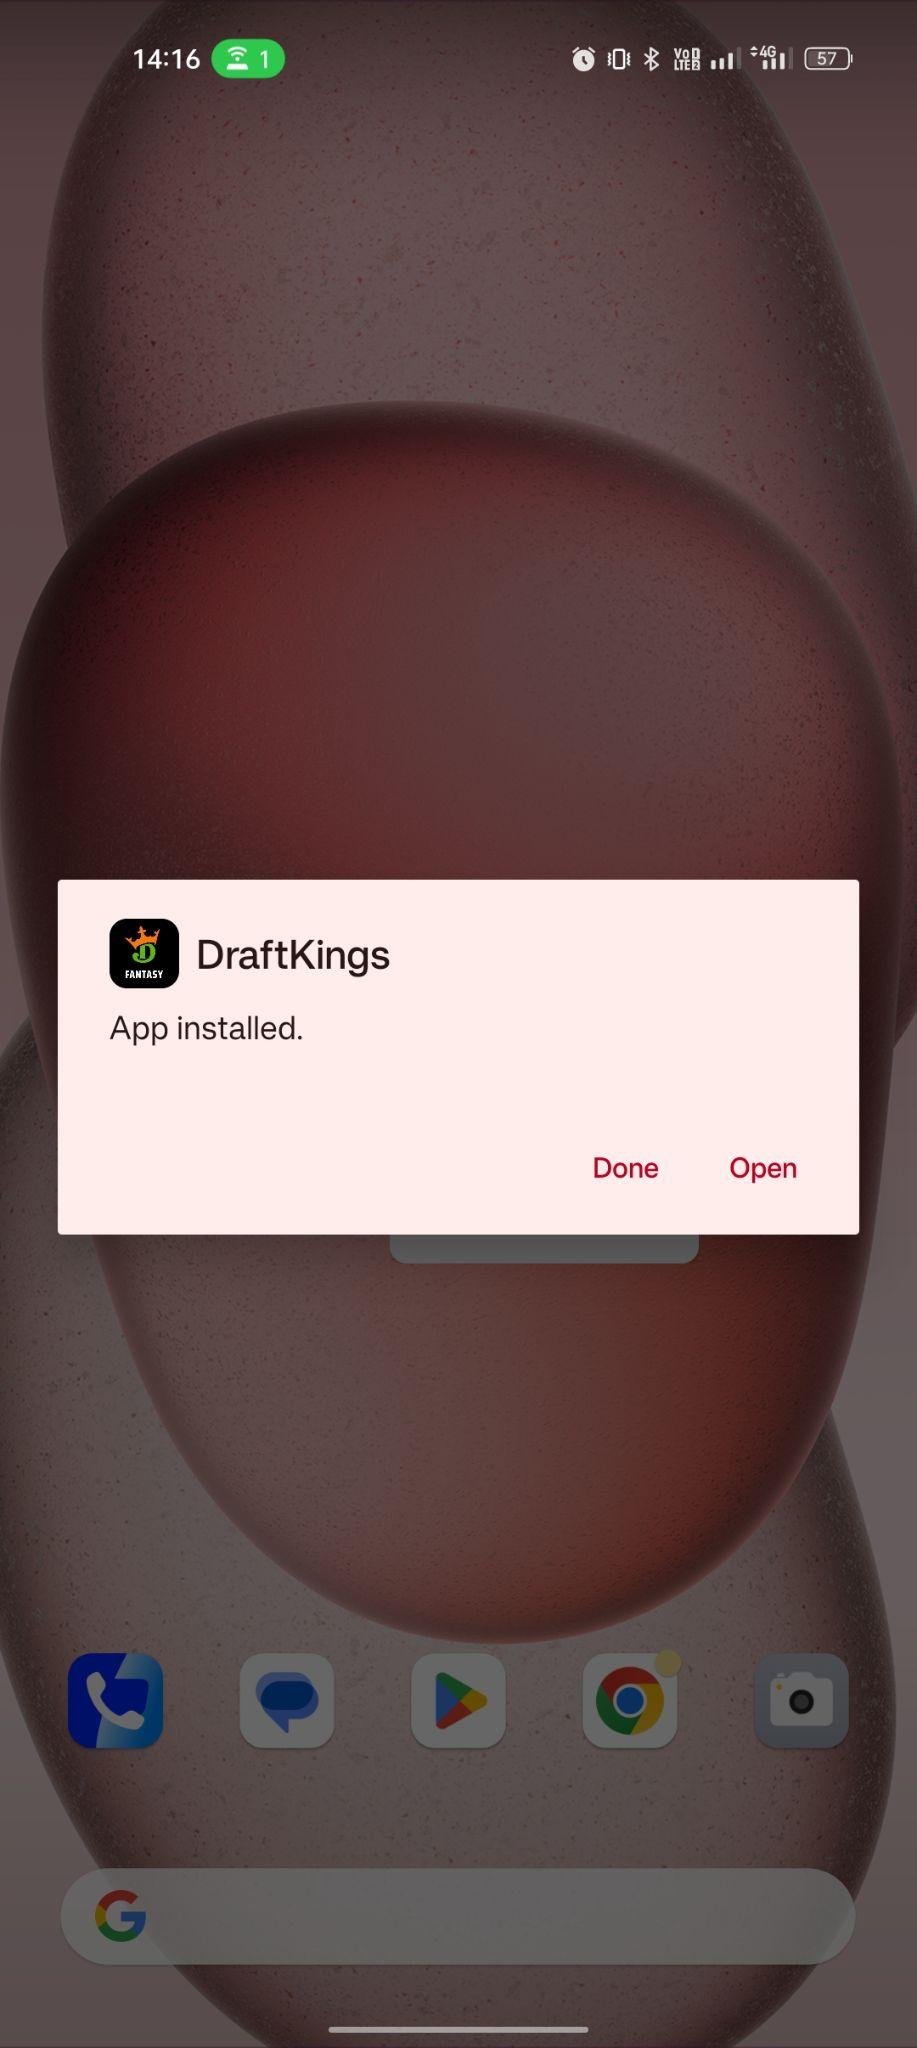 DraftKings apk installed